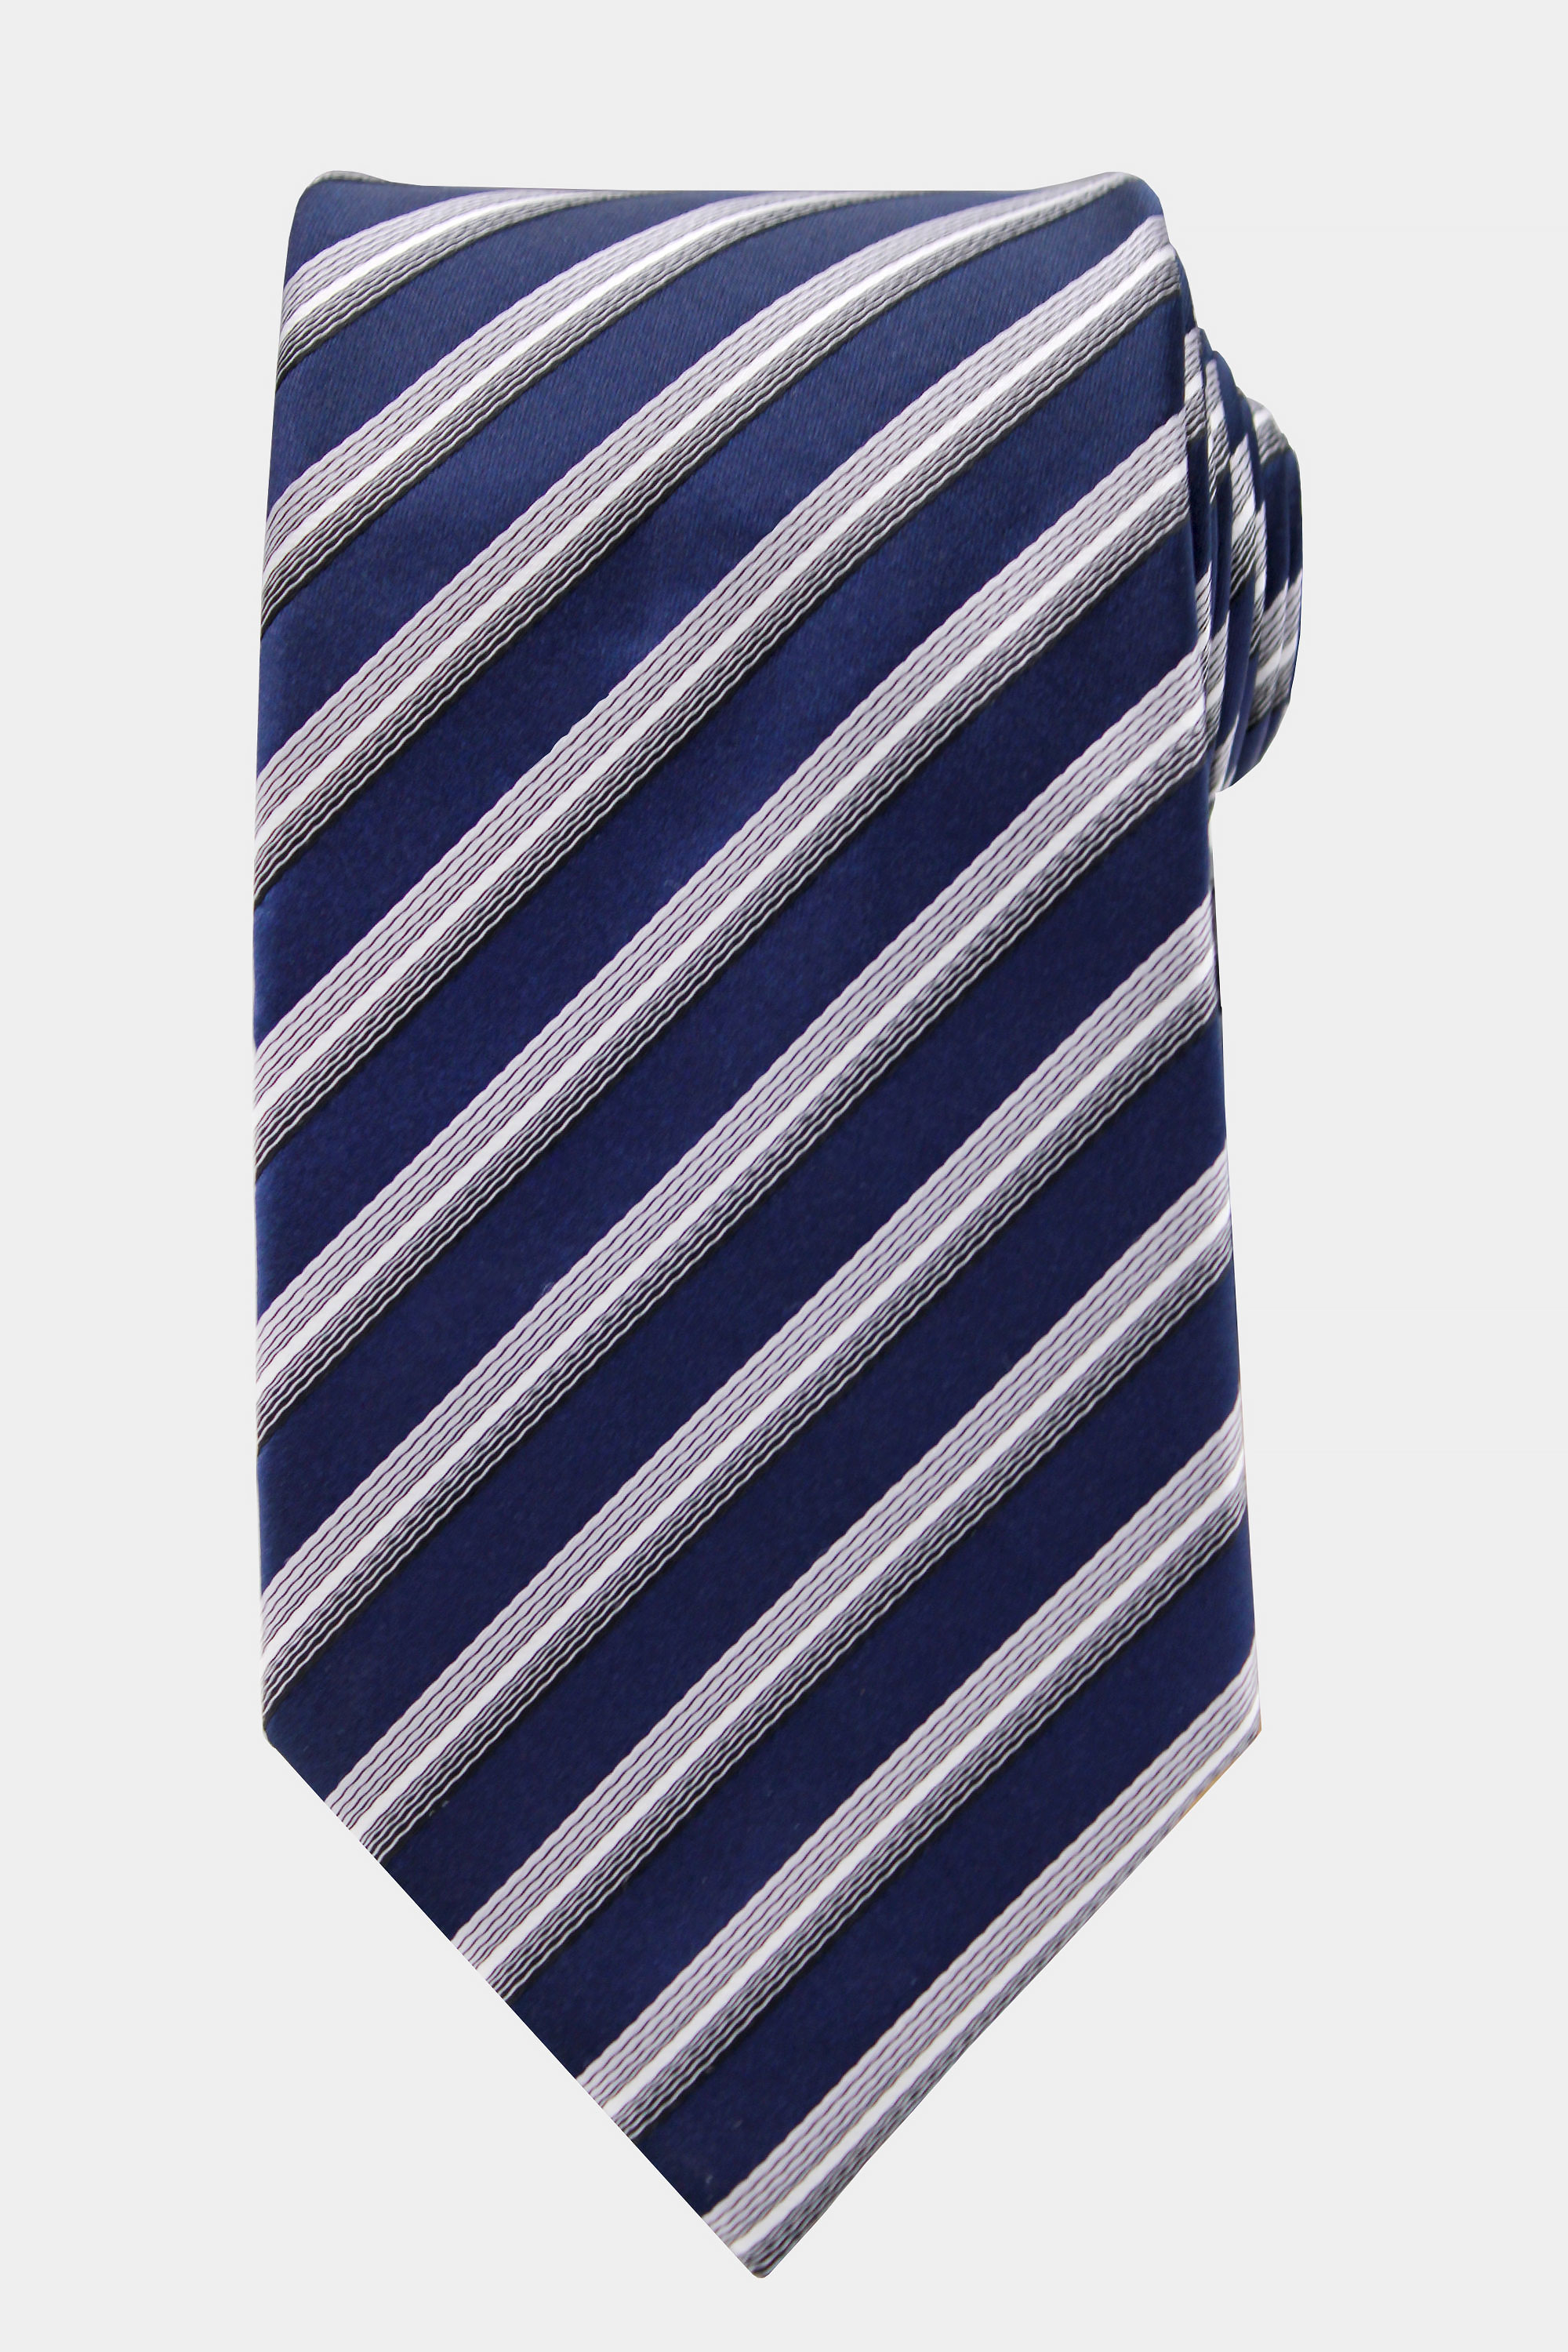 Navy-Blue-Striped-Tie-from-Gentlemansguru.com